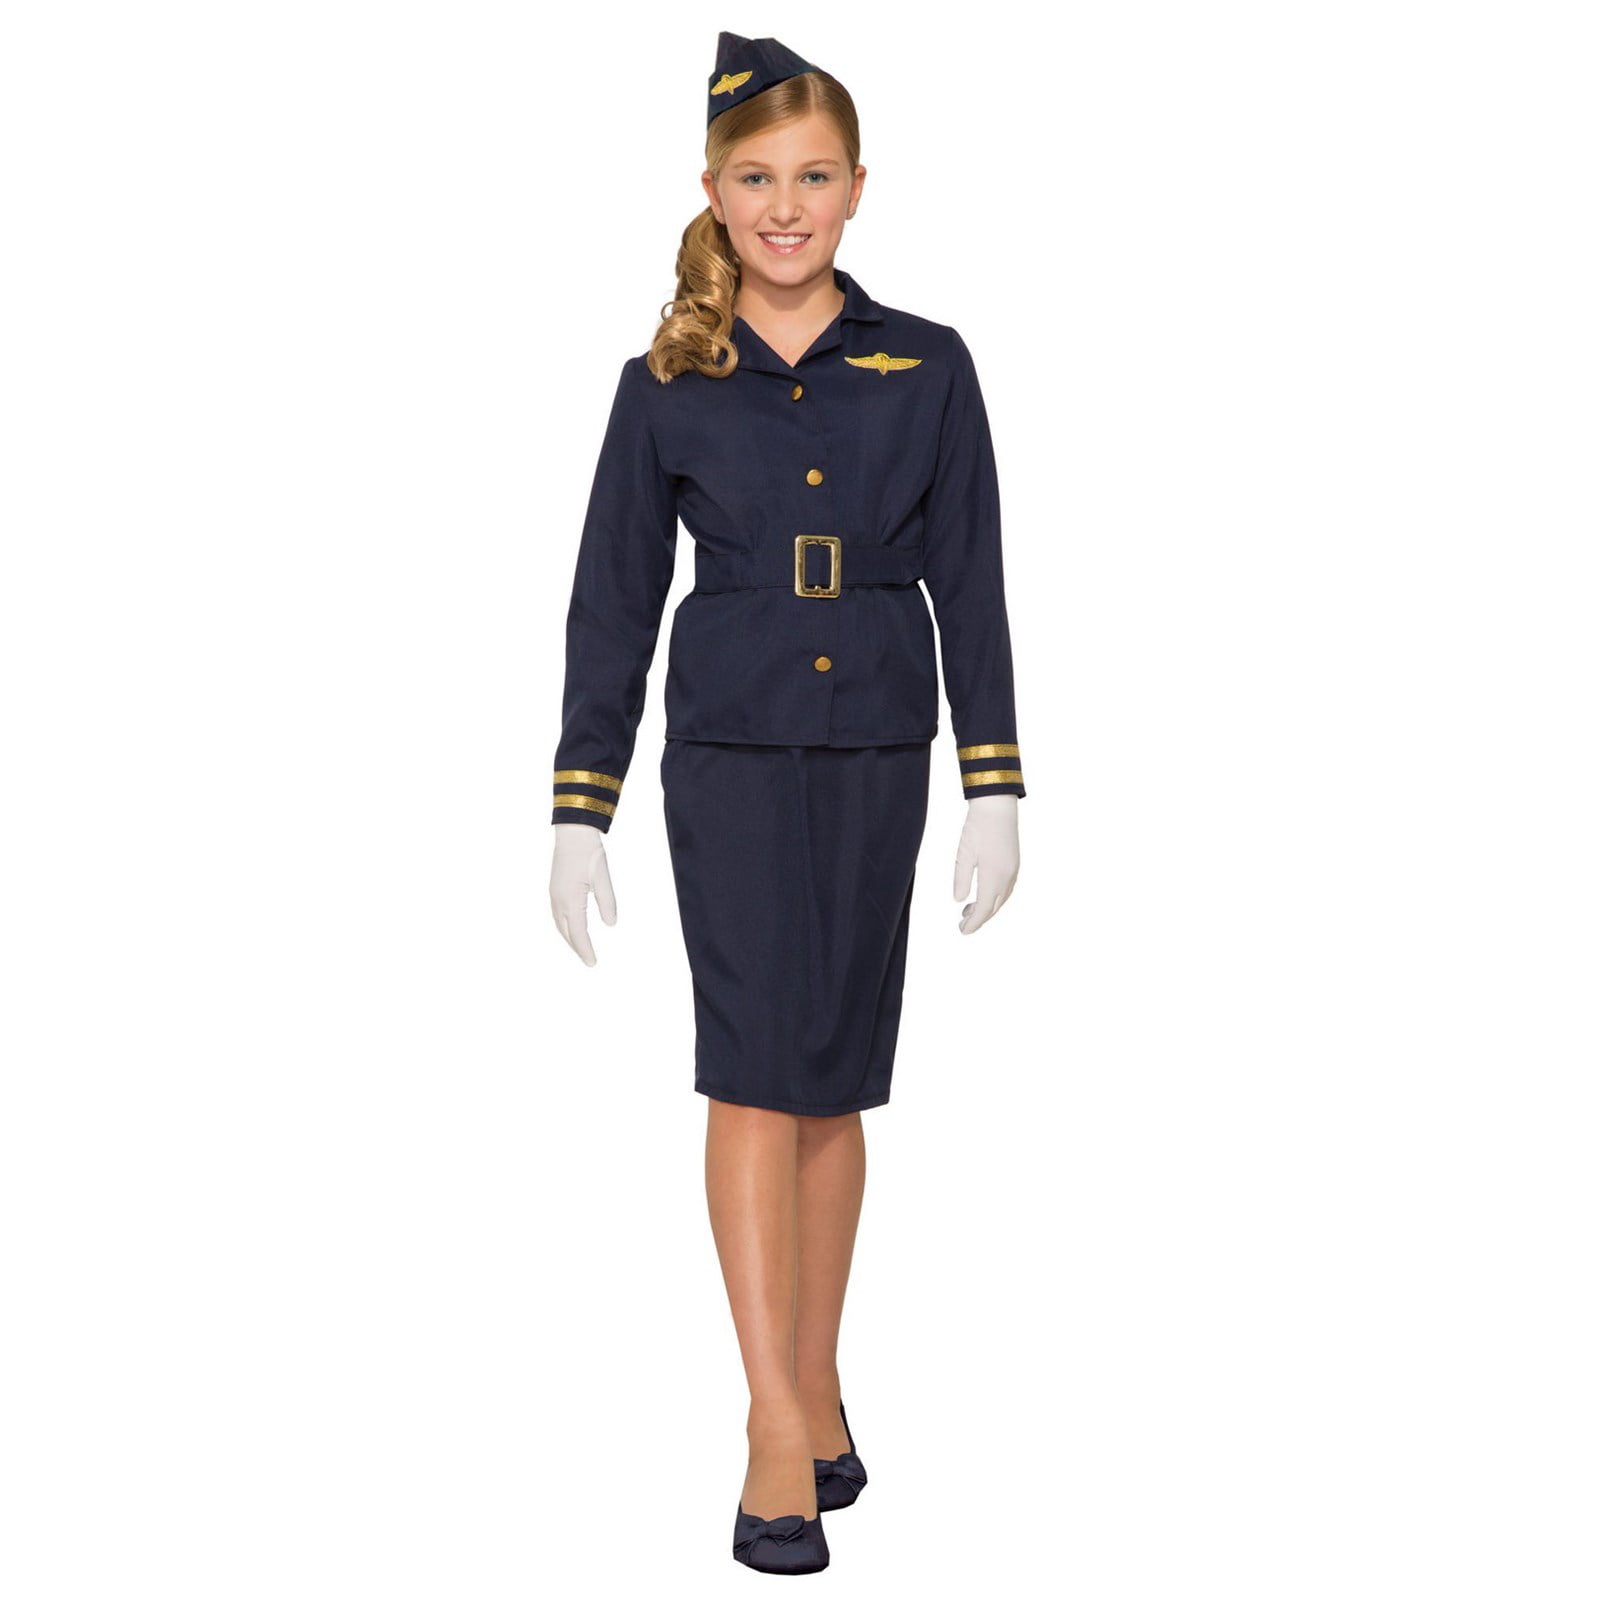 Bristol Novelty Girls Stewardess Fancy Dress Costume Navy Blue S M L